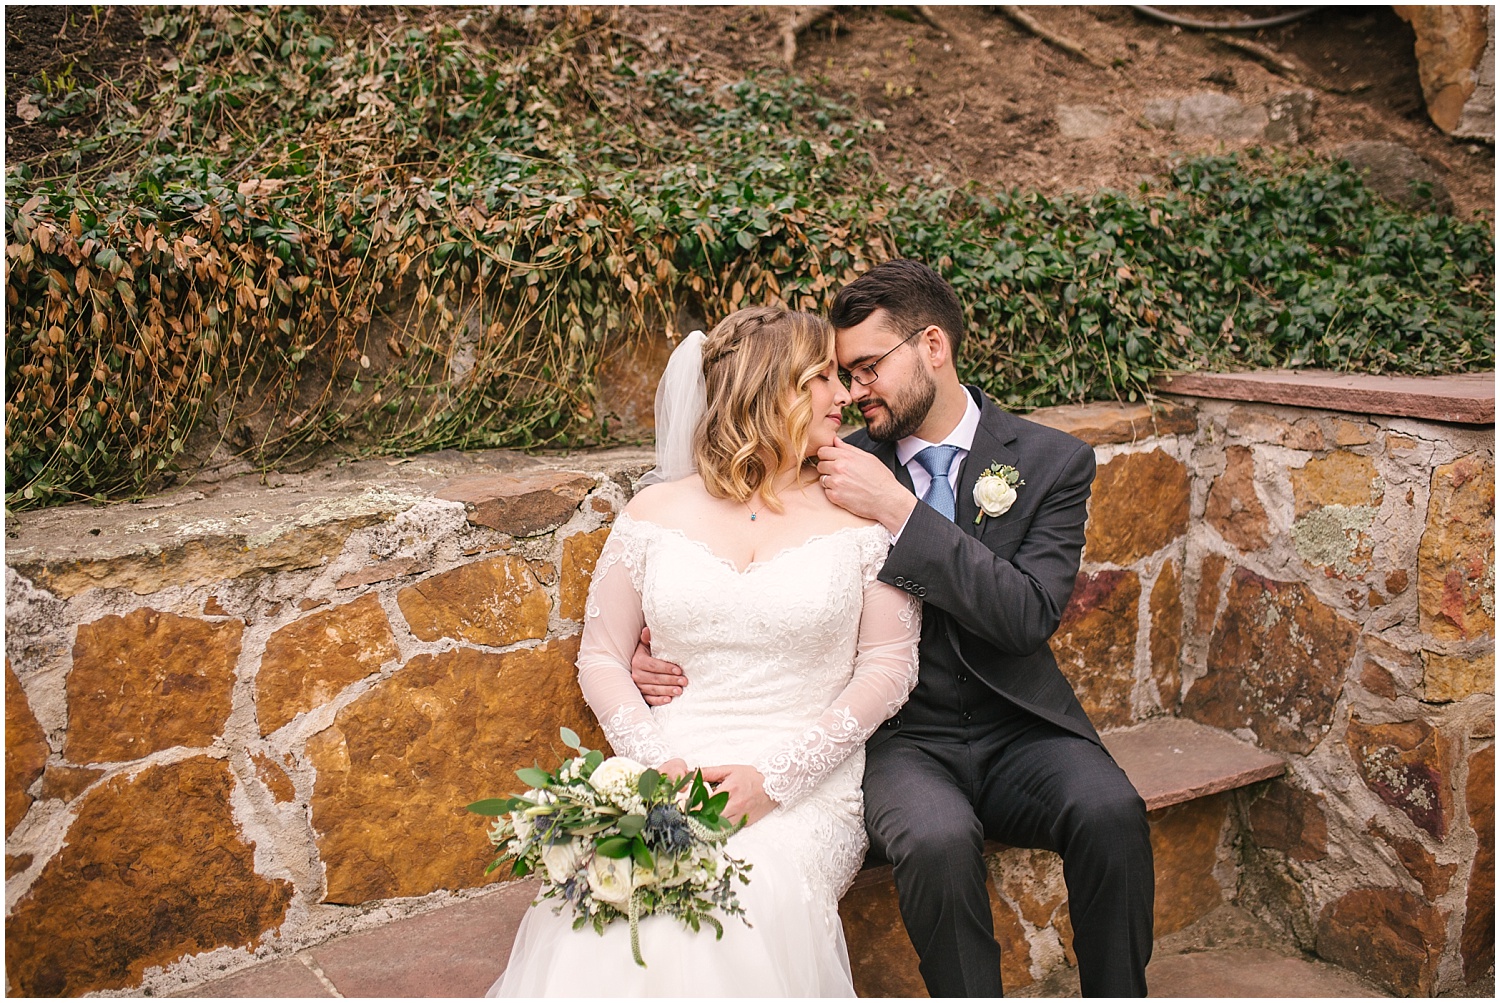 Bride and groom cuddling on a stone bench at Wedgewood Weddings Boulder Creek